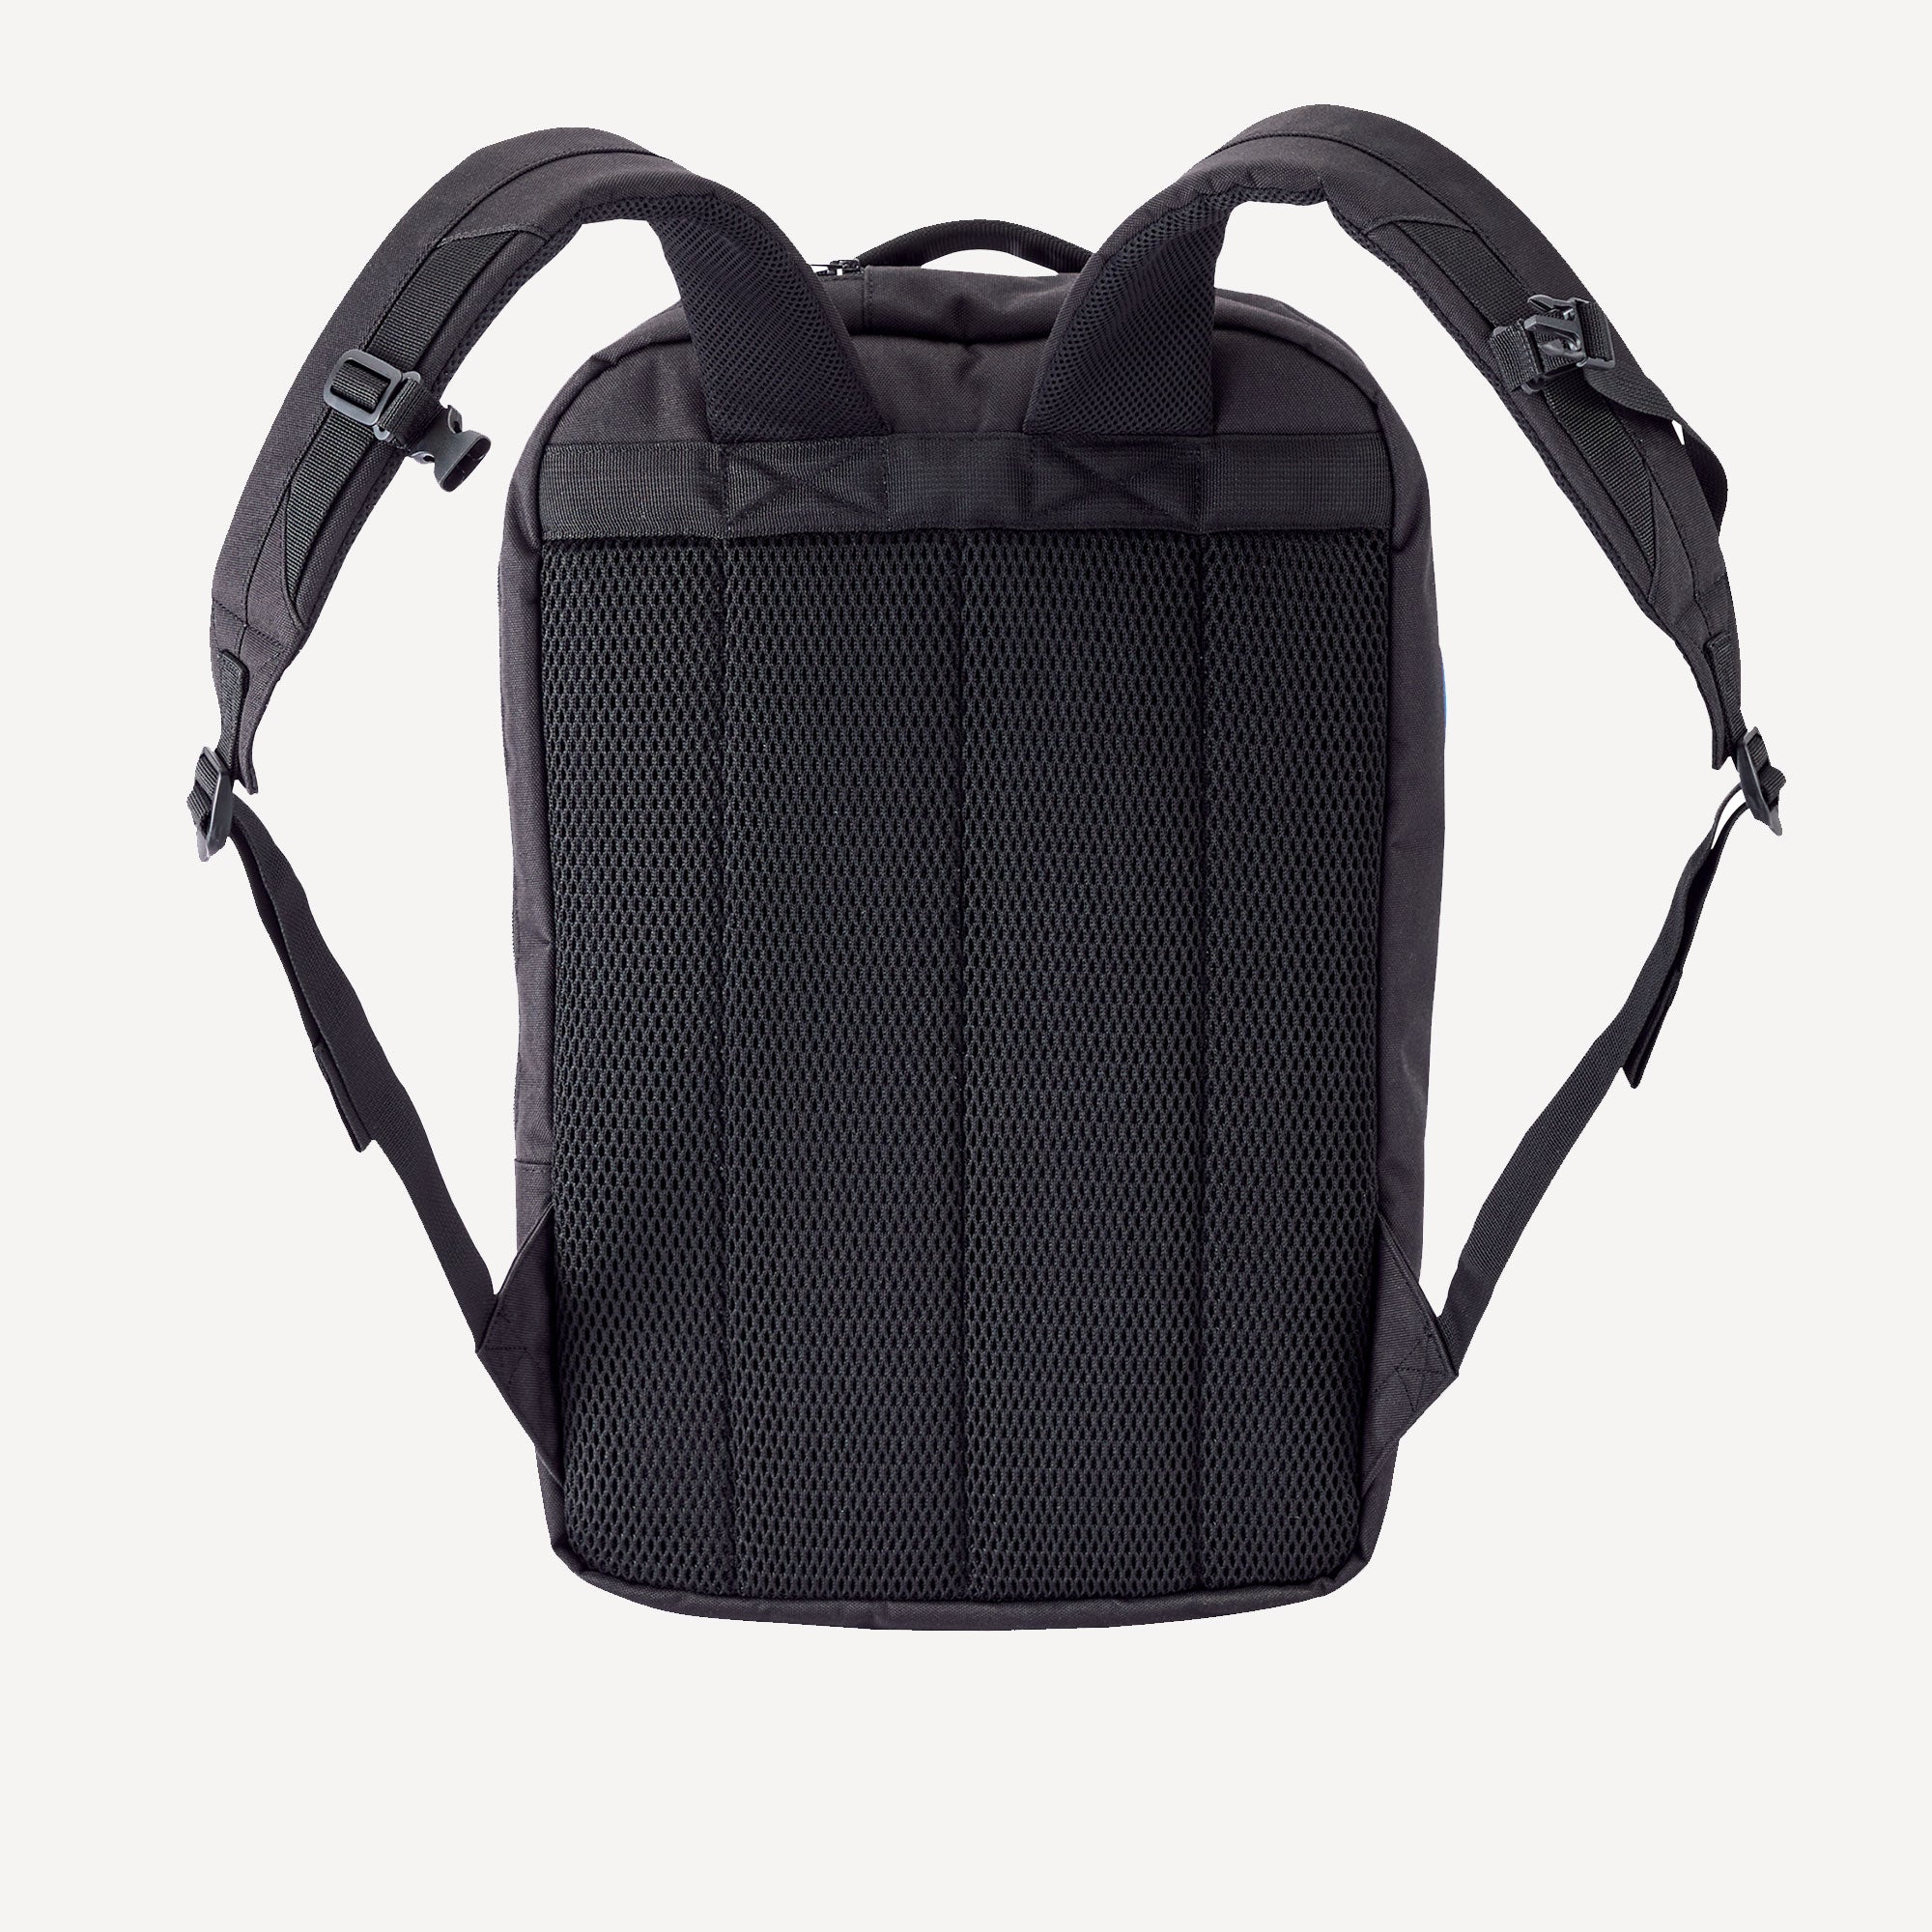 Yonex Pro Tennis Backpack Black (2)